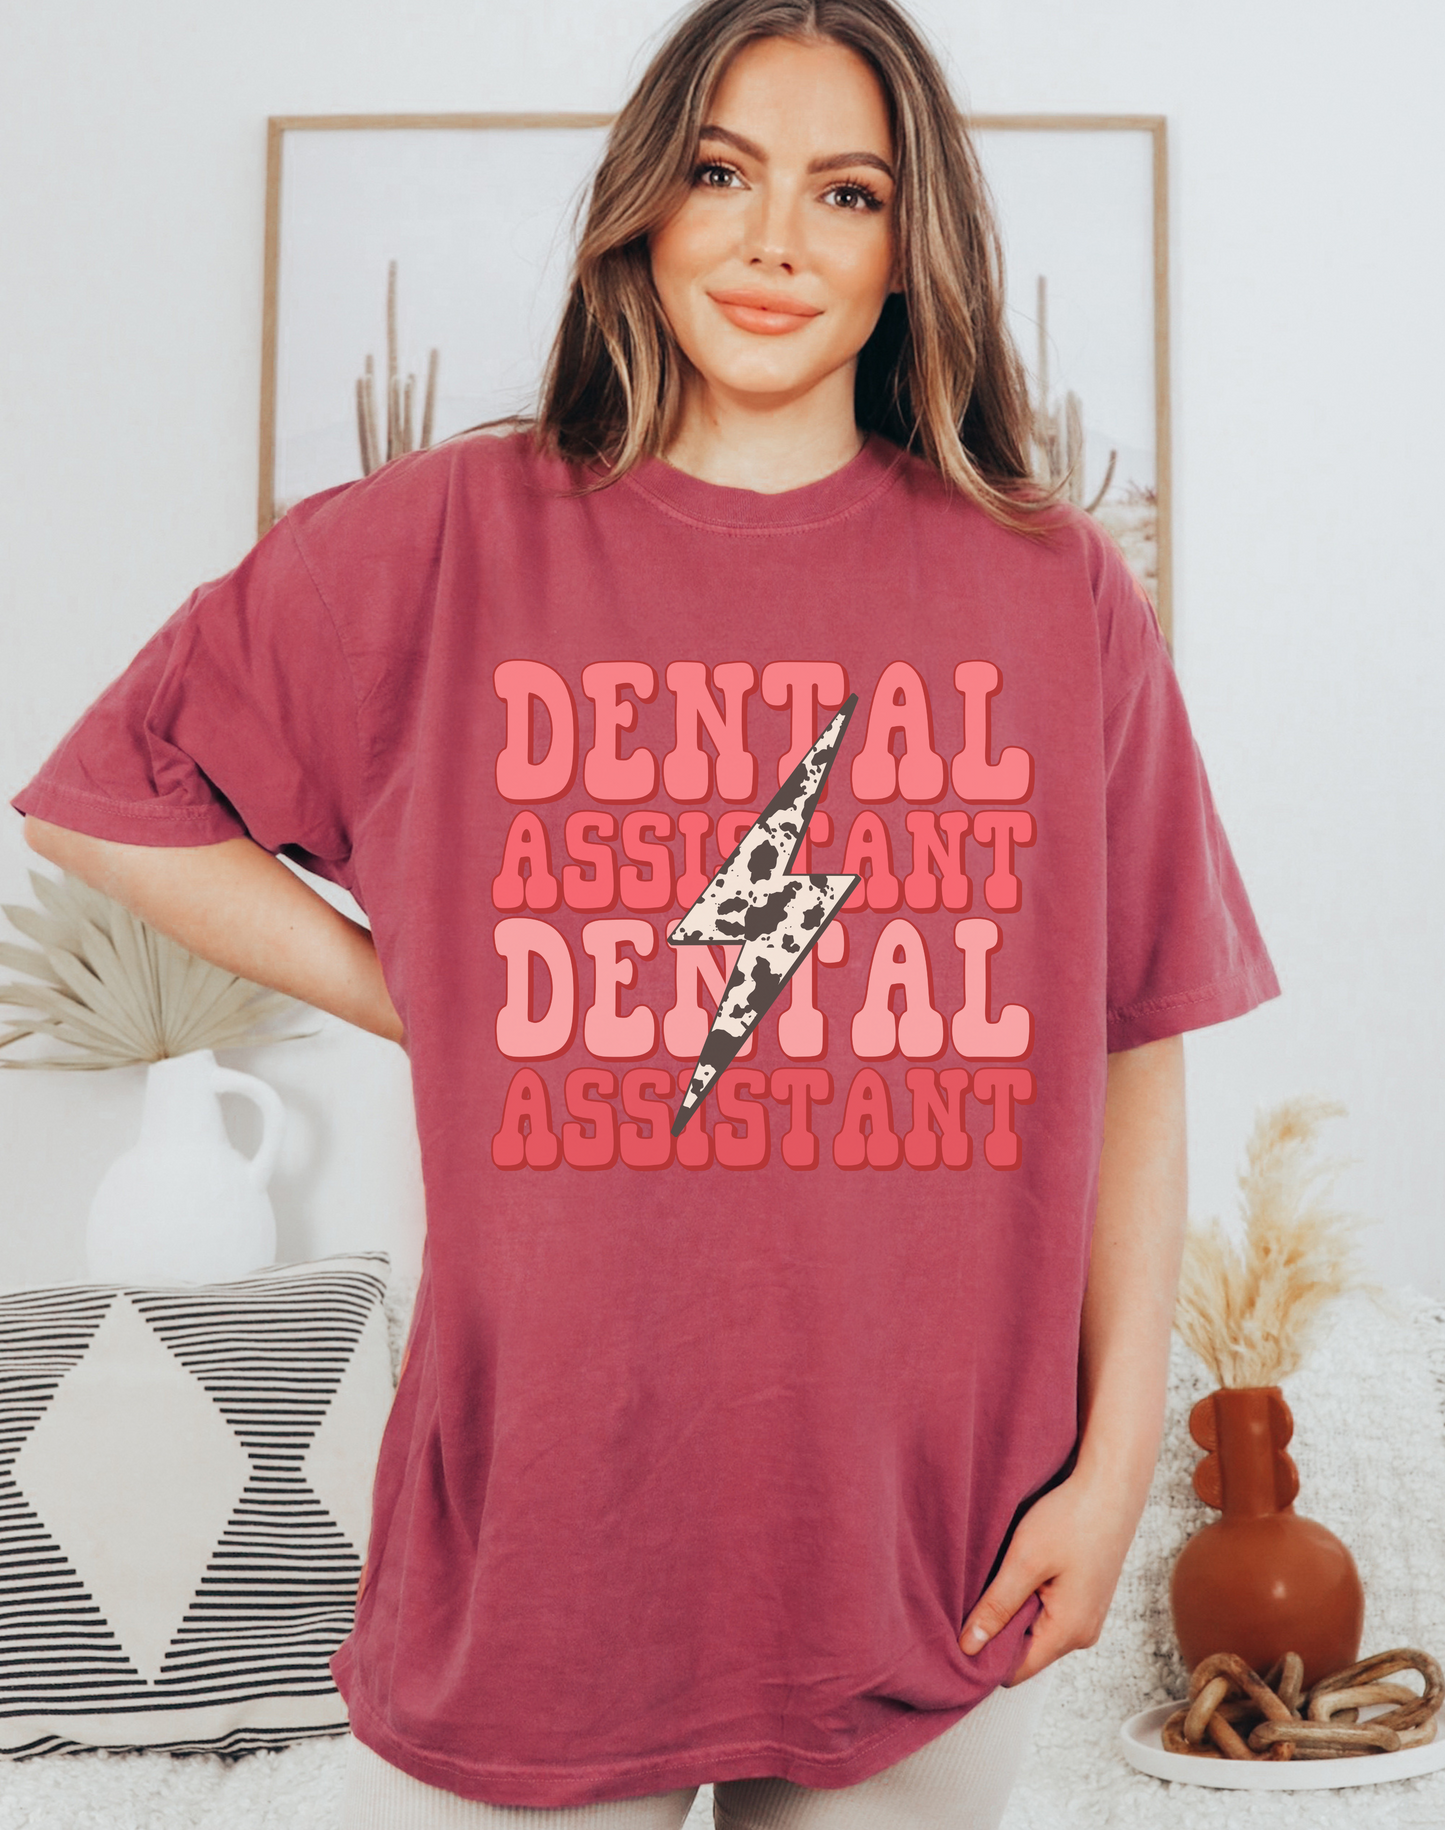 Dental Assistant Tee